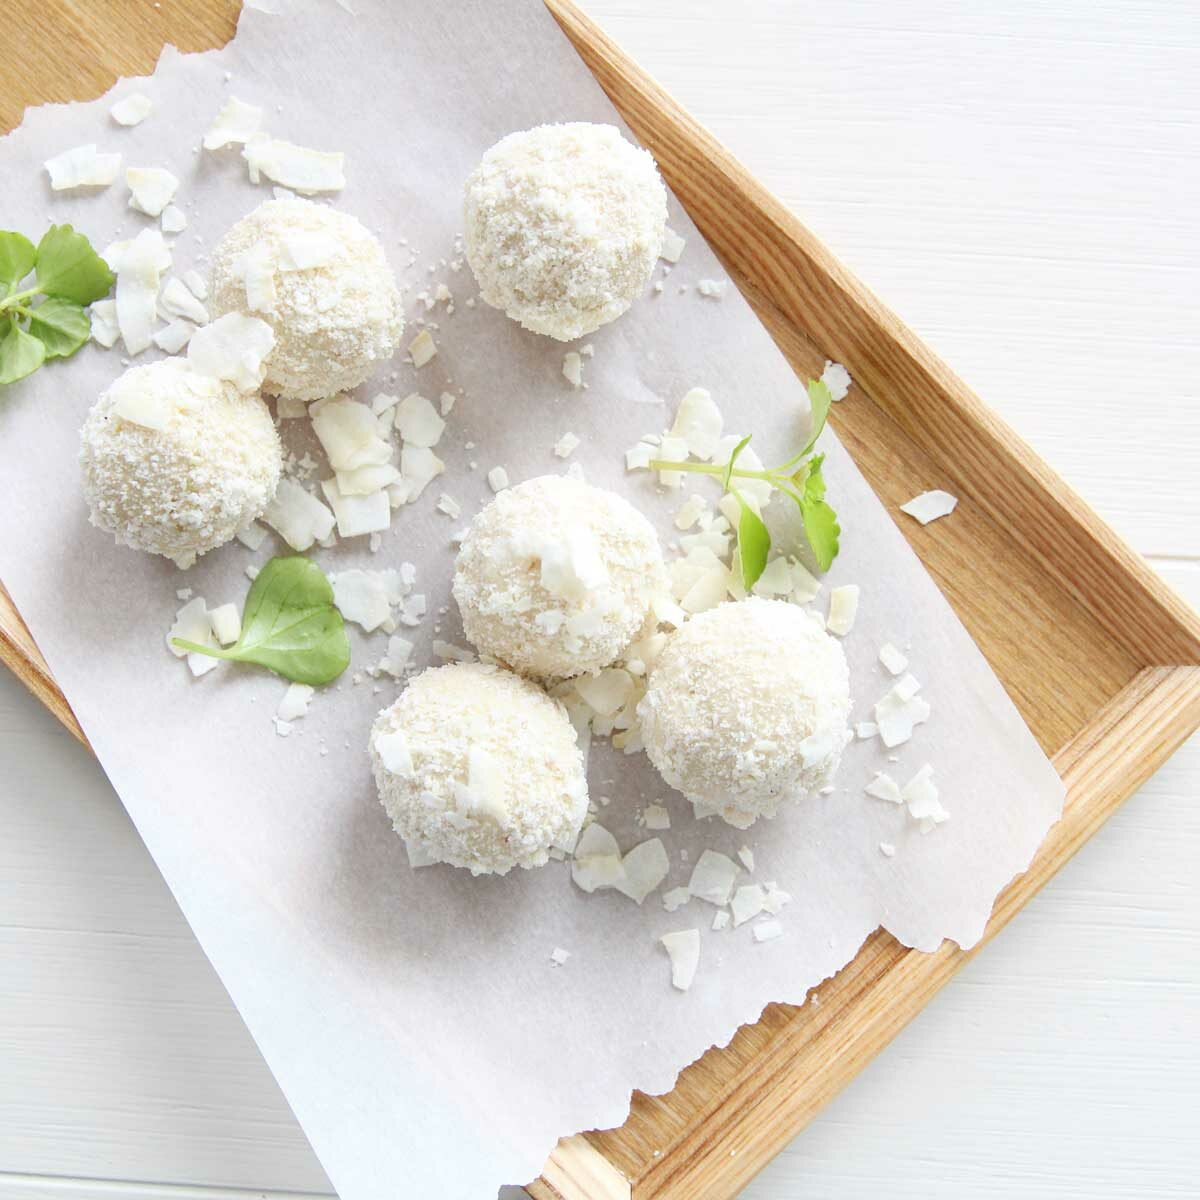 Probiotic Coconut Protein Balls Recipe (Easy Healthy and No Bake) - protein balls